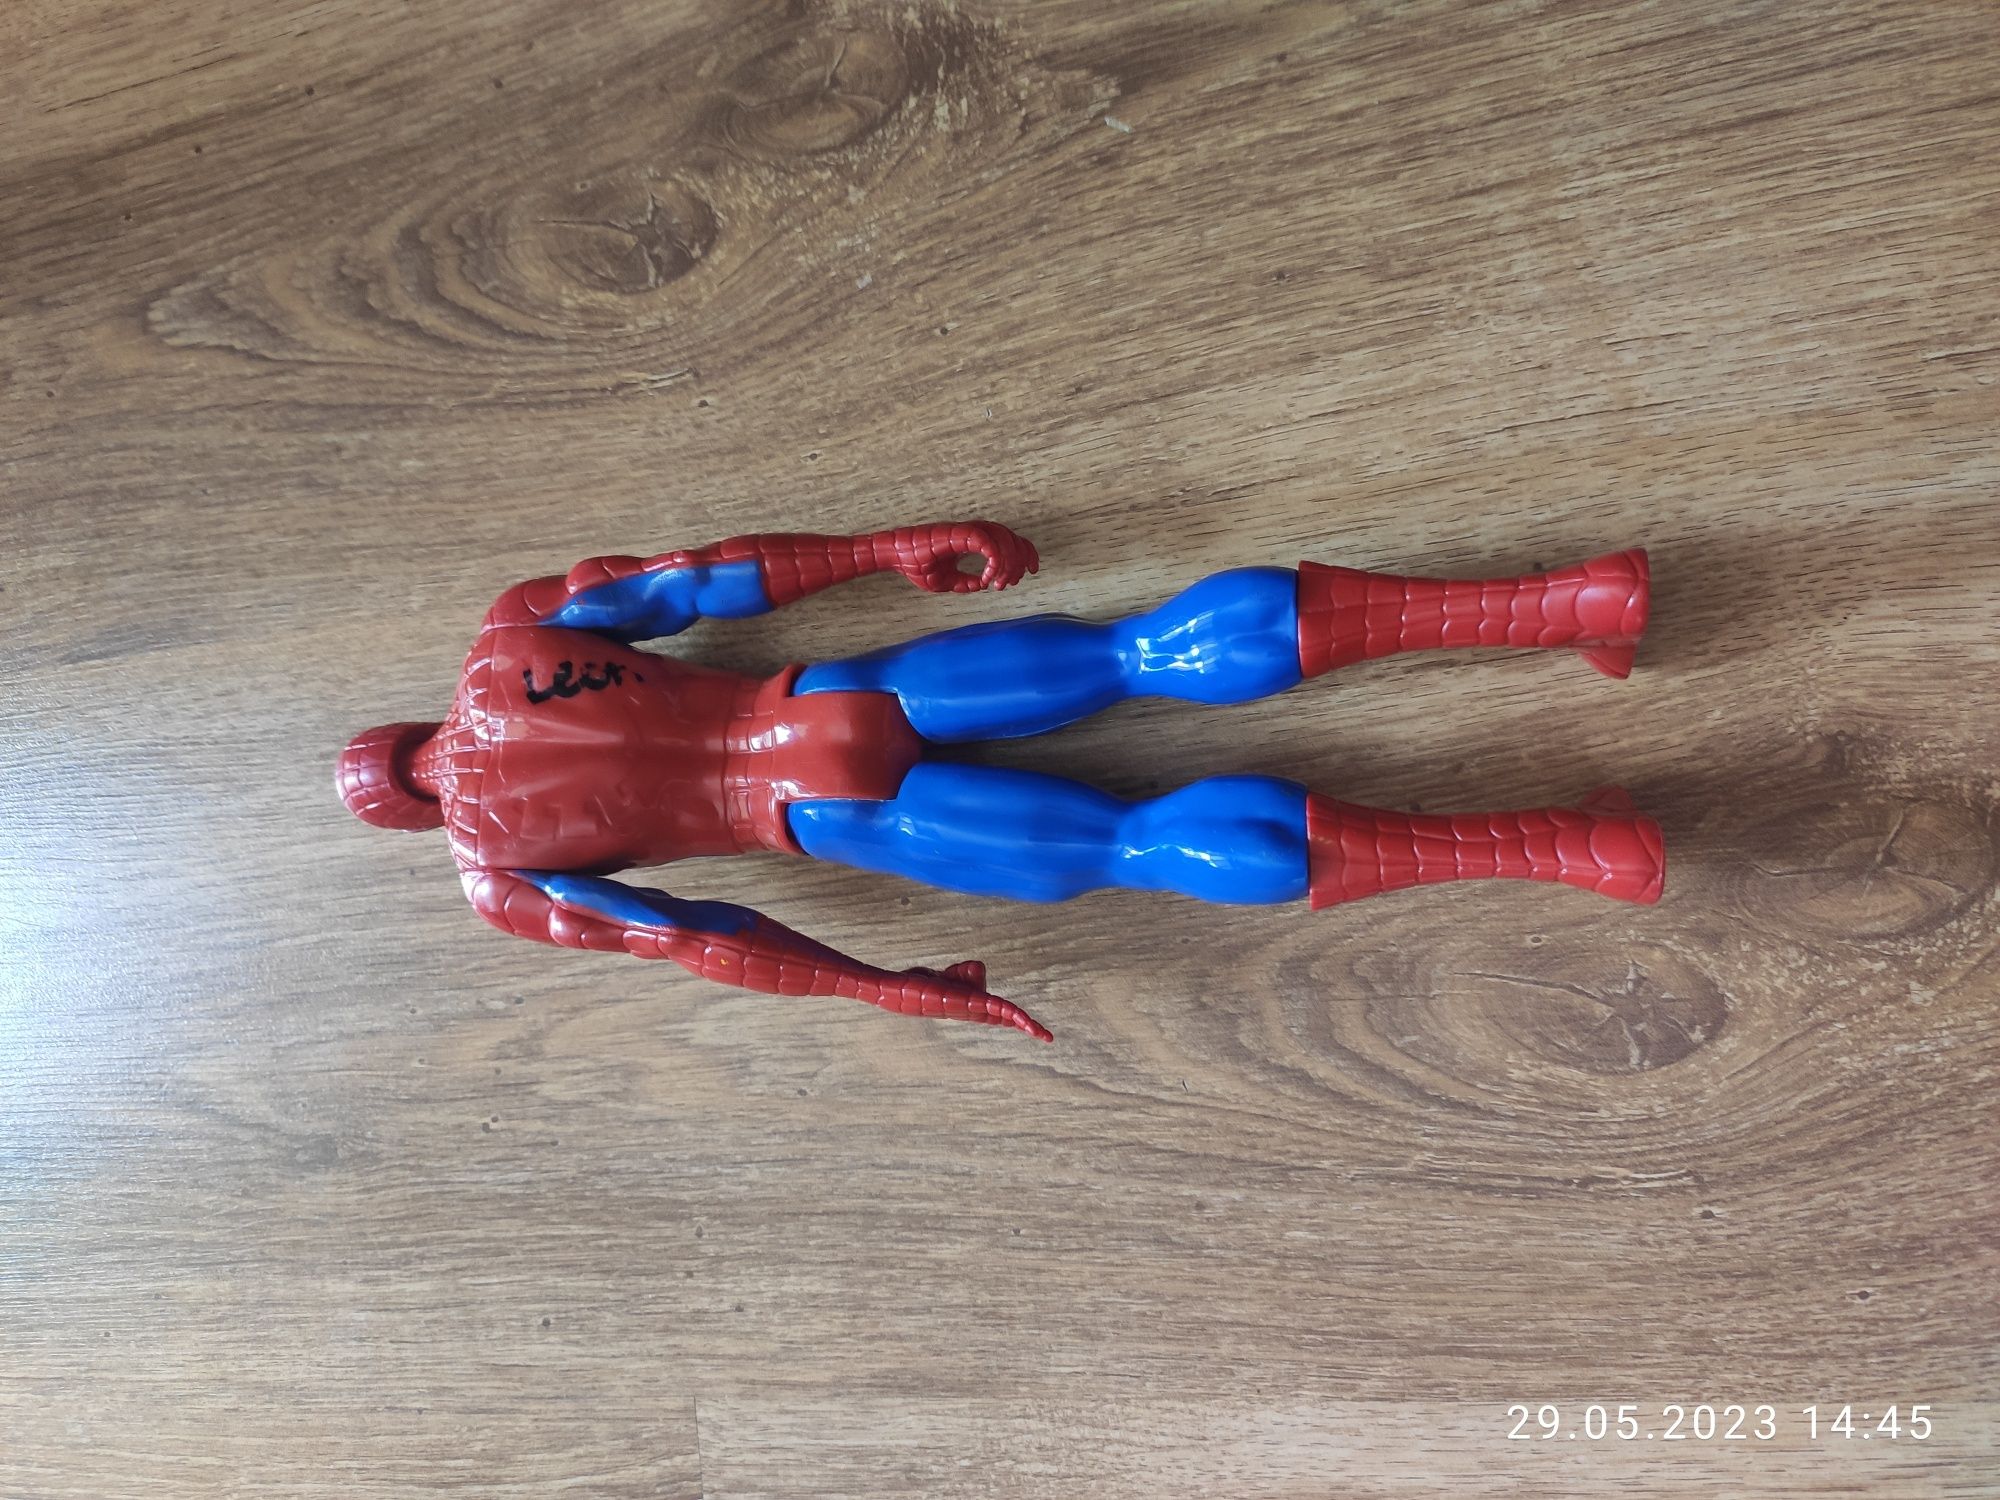 Figurka Spiderman 30 cm idealny stan